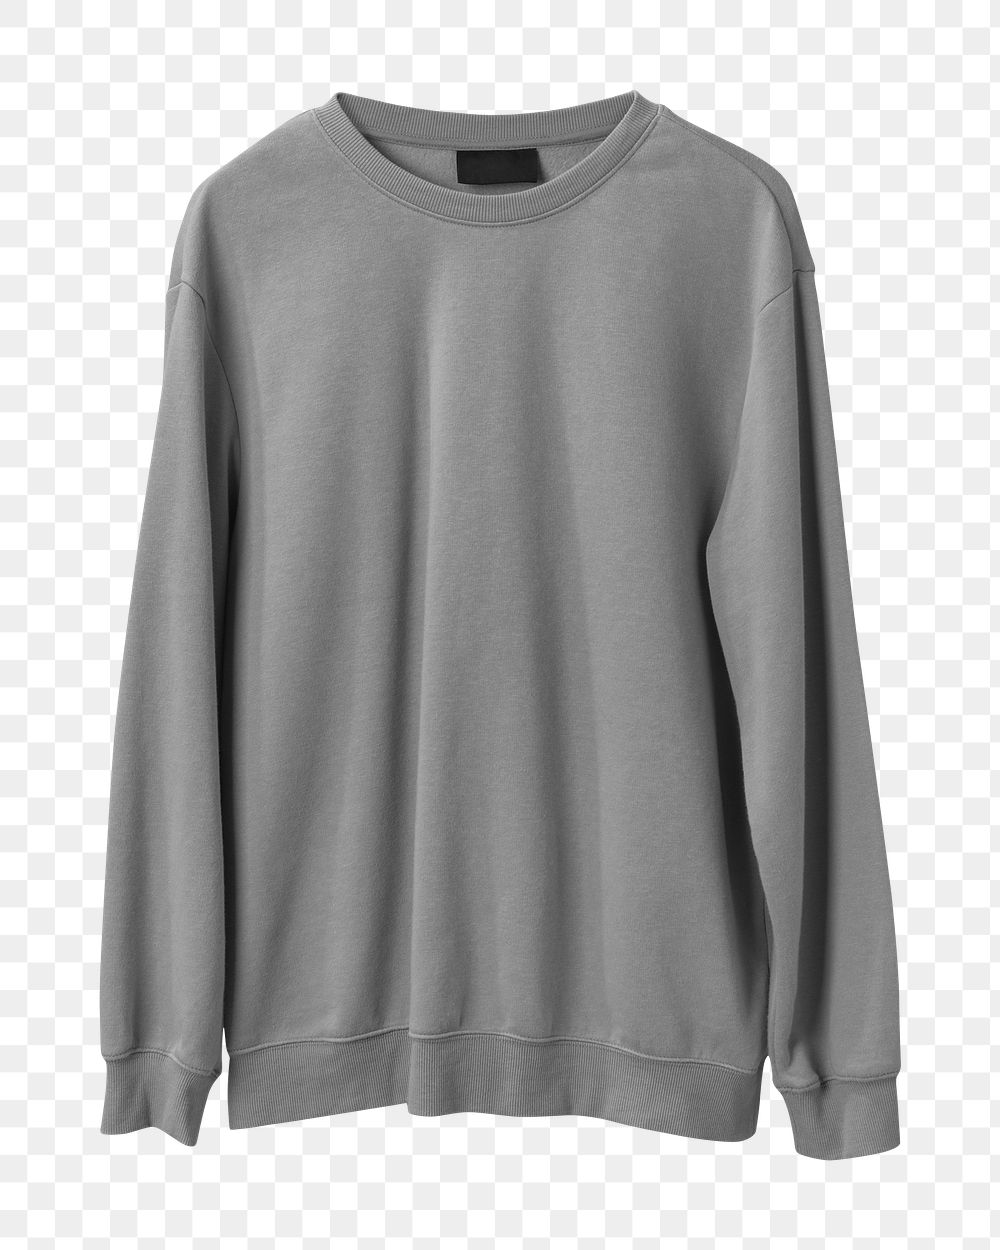 Grey sweater png, winter fashion, transparent design